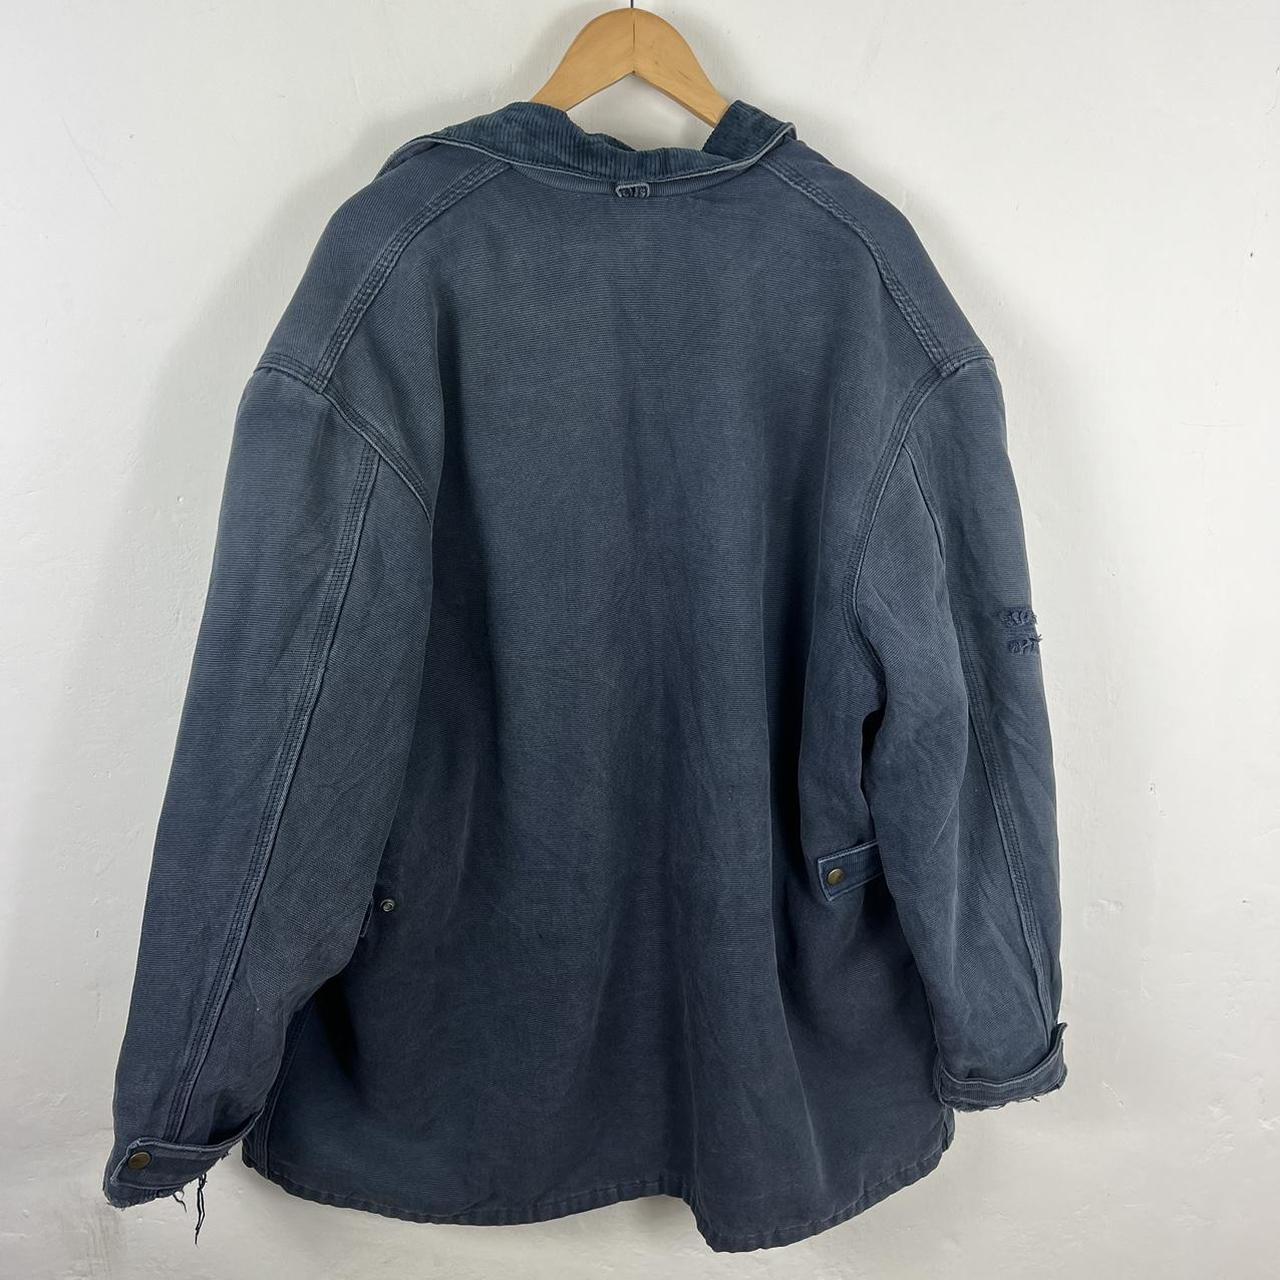 Carhartt chore jacket XL